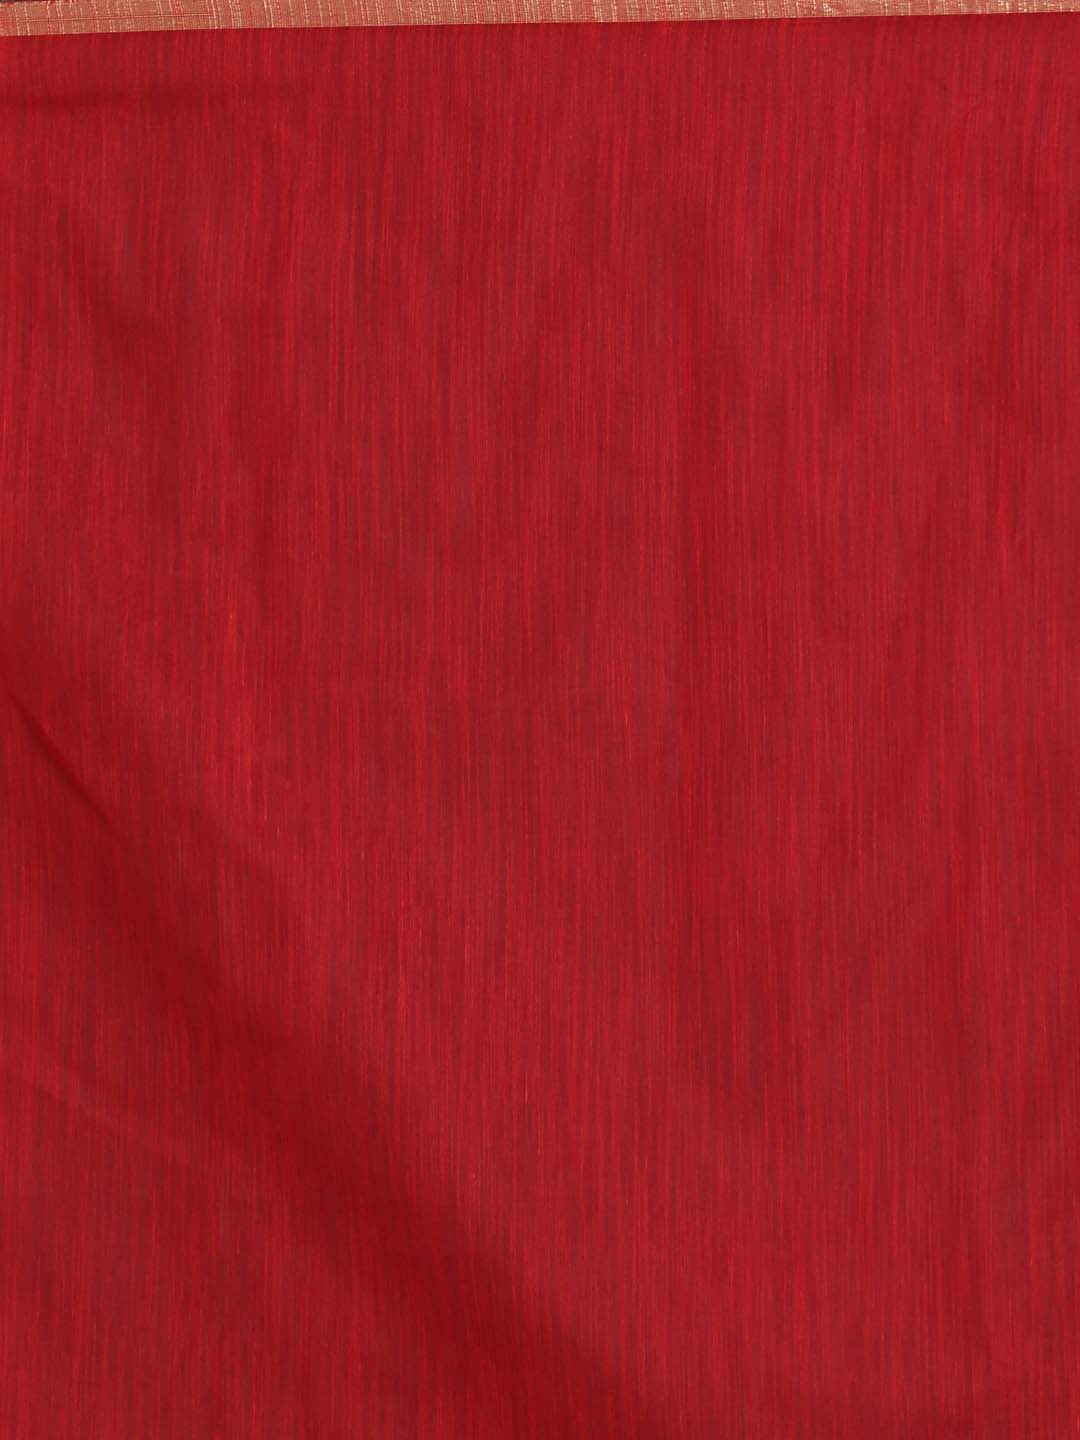 Indethnic Banarasi Red Solid Daily Wear Saree - Saree Detail View